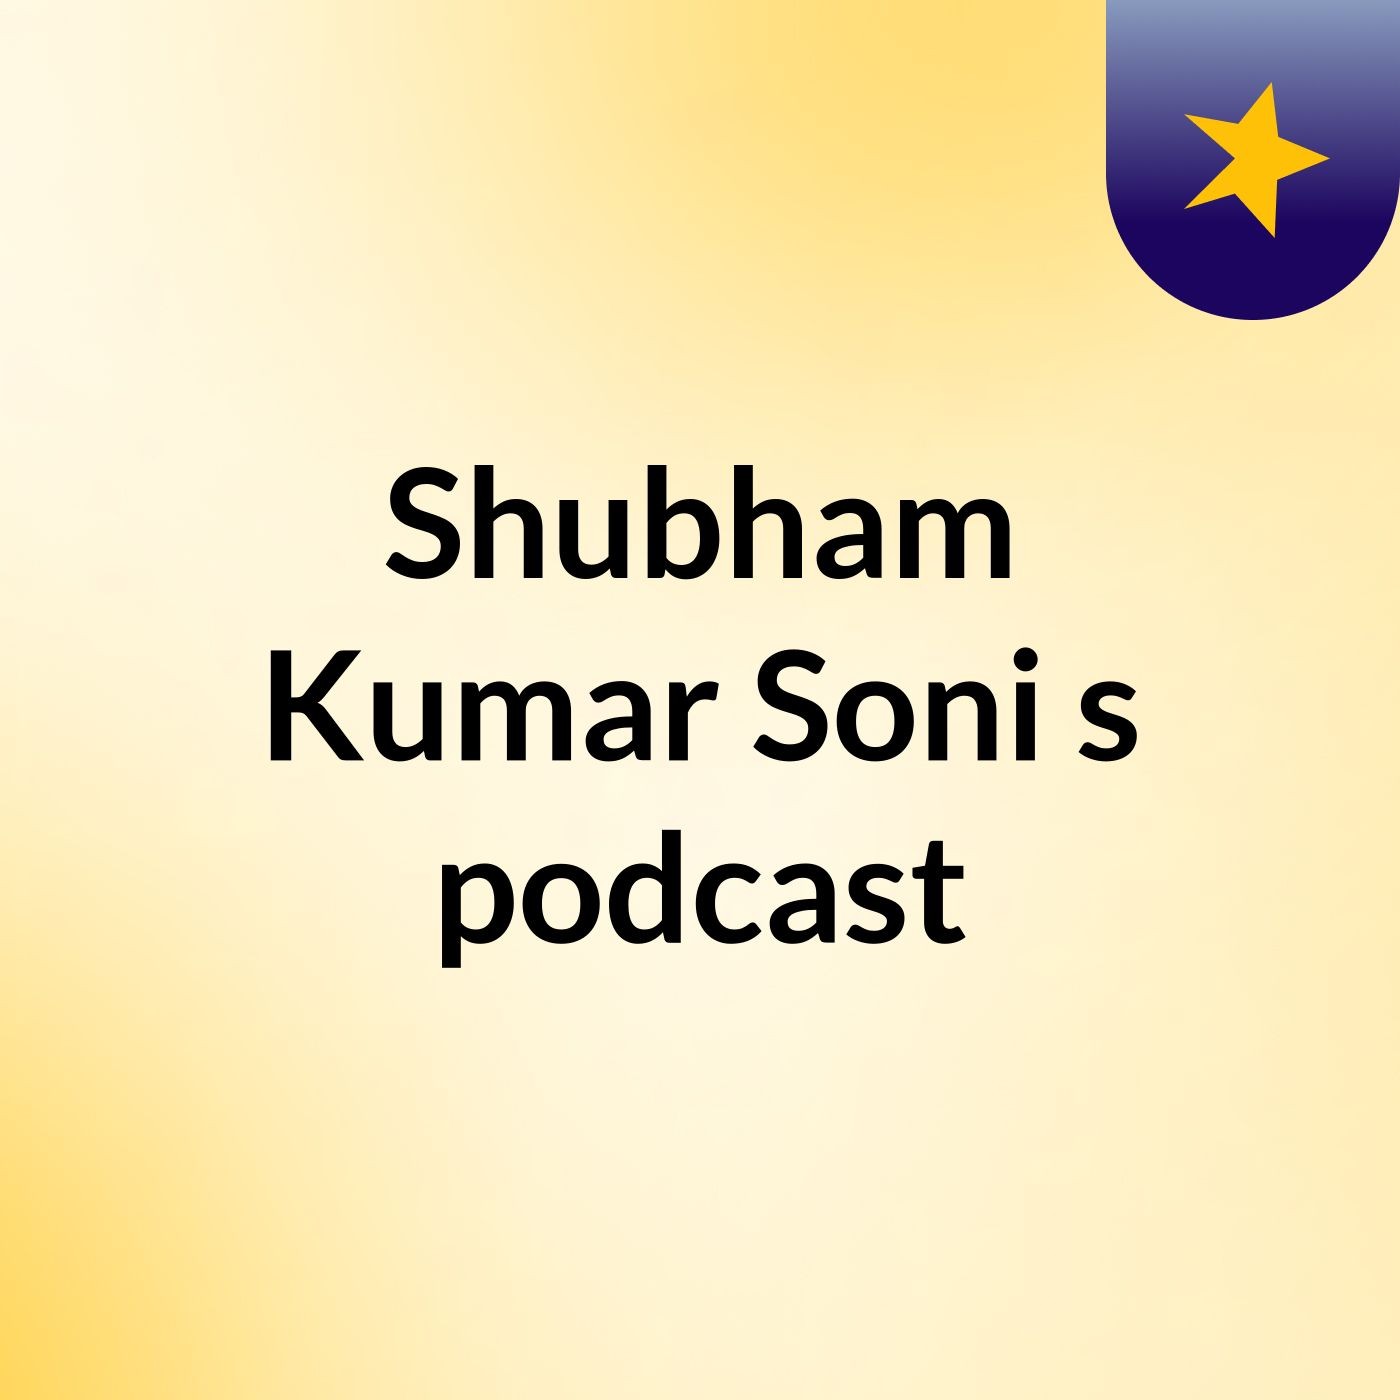 Shubham Kumar Soni's podcast